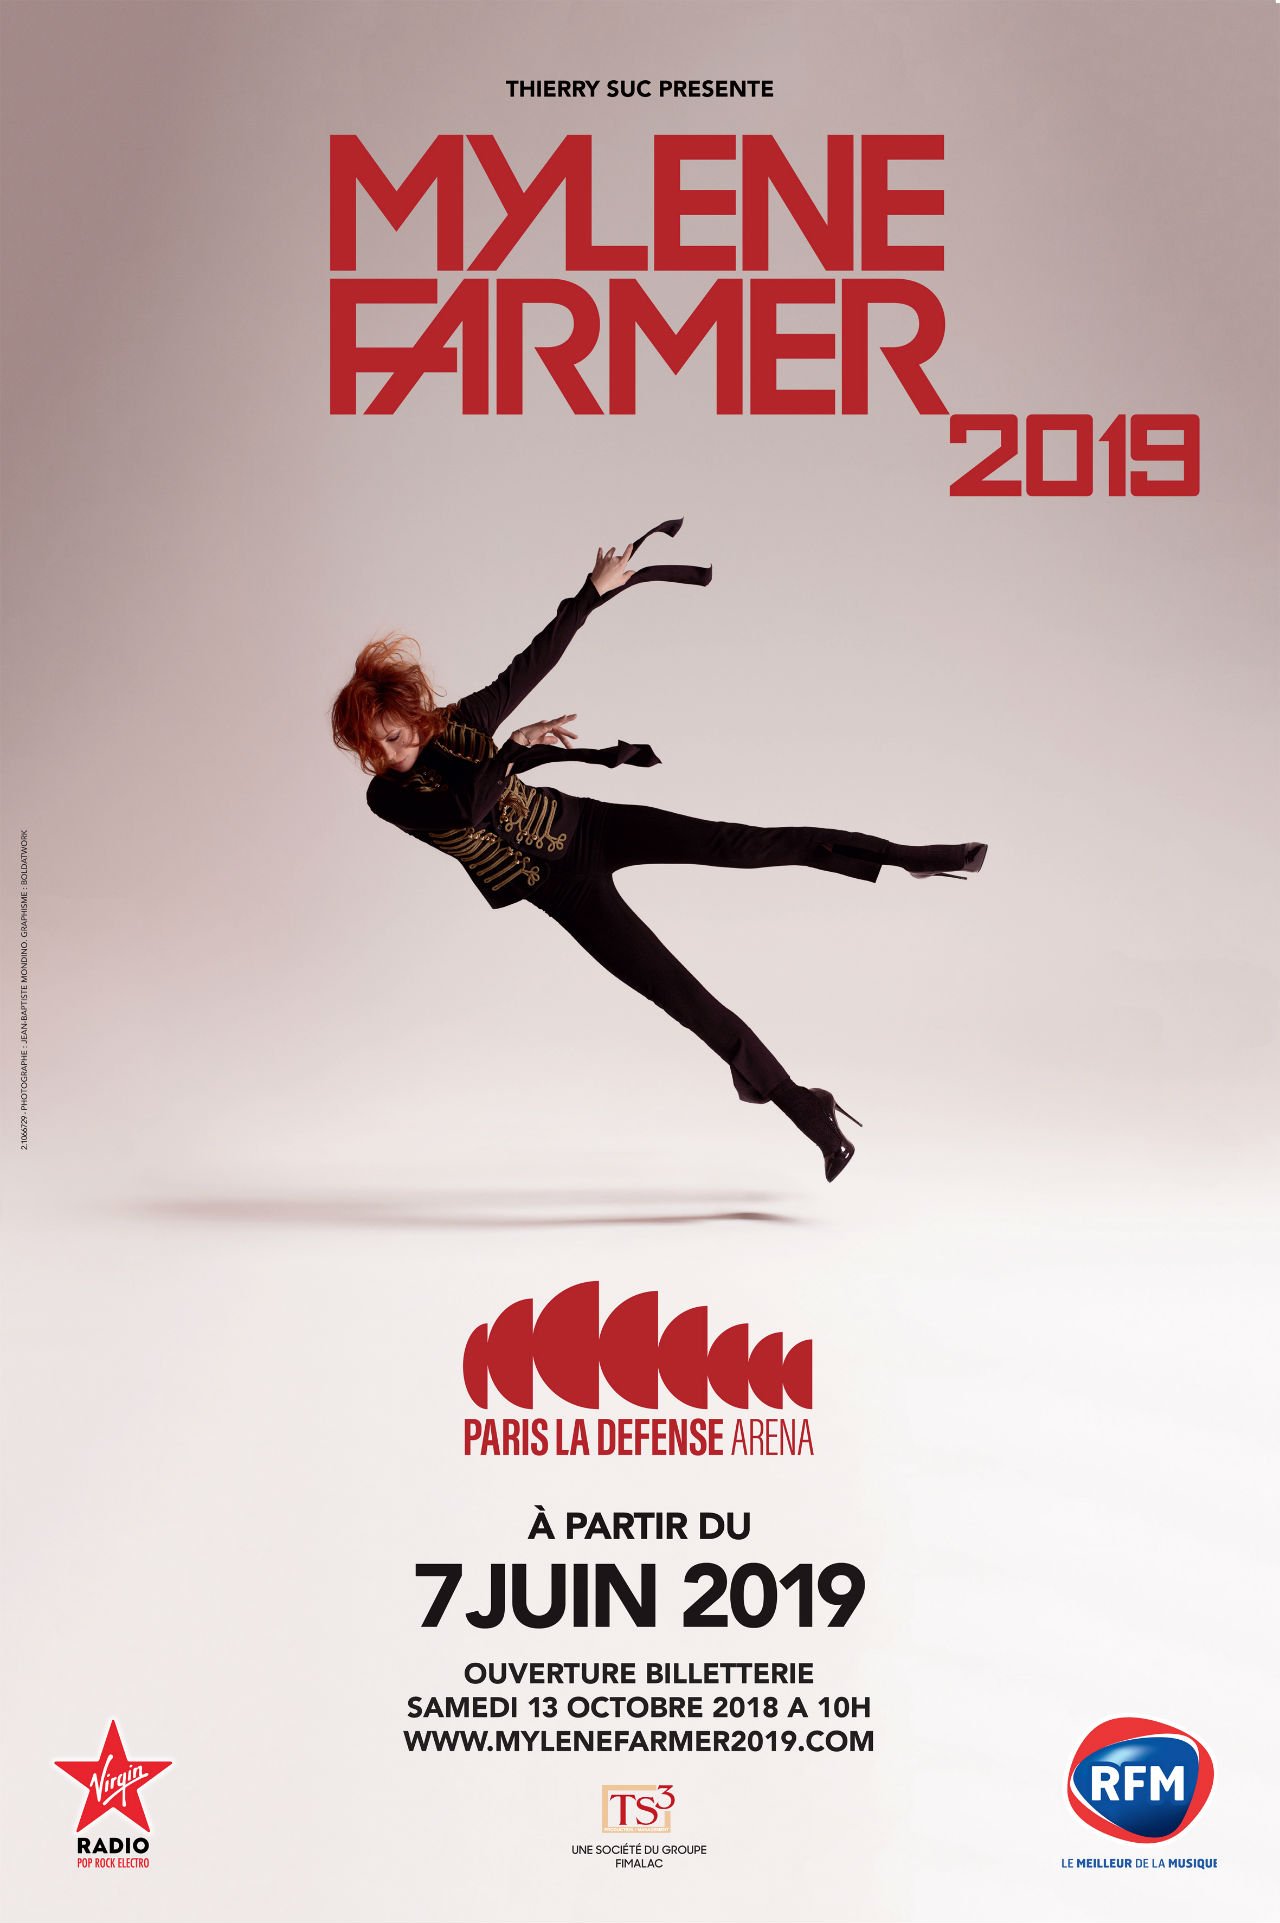 Mylène Farmer at Paris La Défense Arena (Nanterre) on 15 Jun 2019 | Last.fm